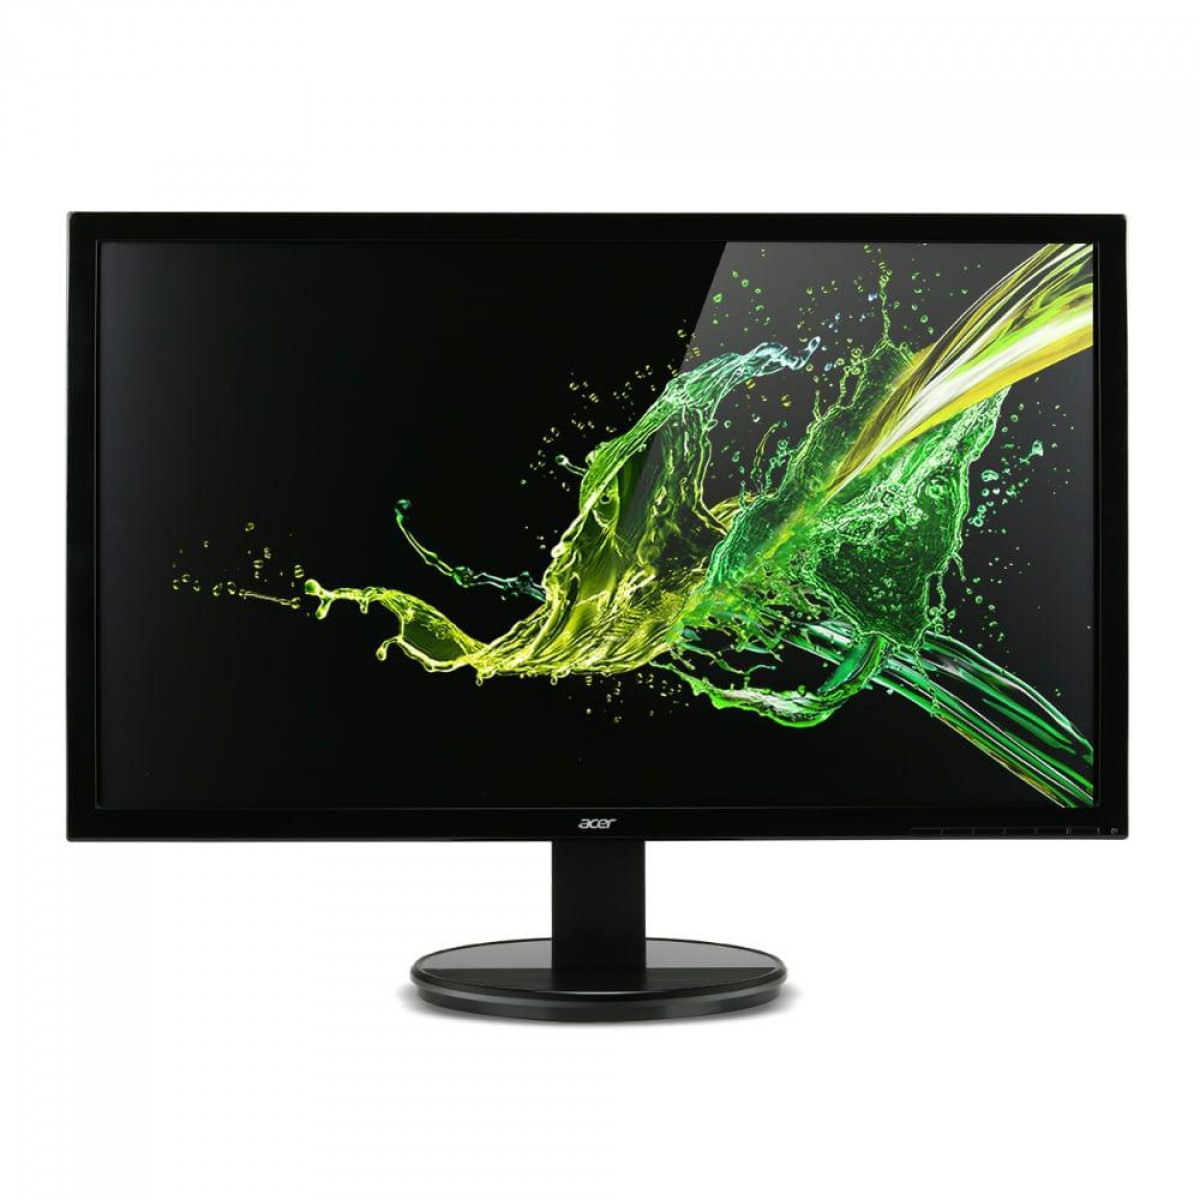 Monitor Acer K222HQL, 21.5 pol, TN, Full HD, HDMI/VGA/DVI, K222HQL